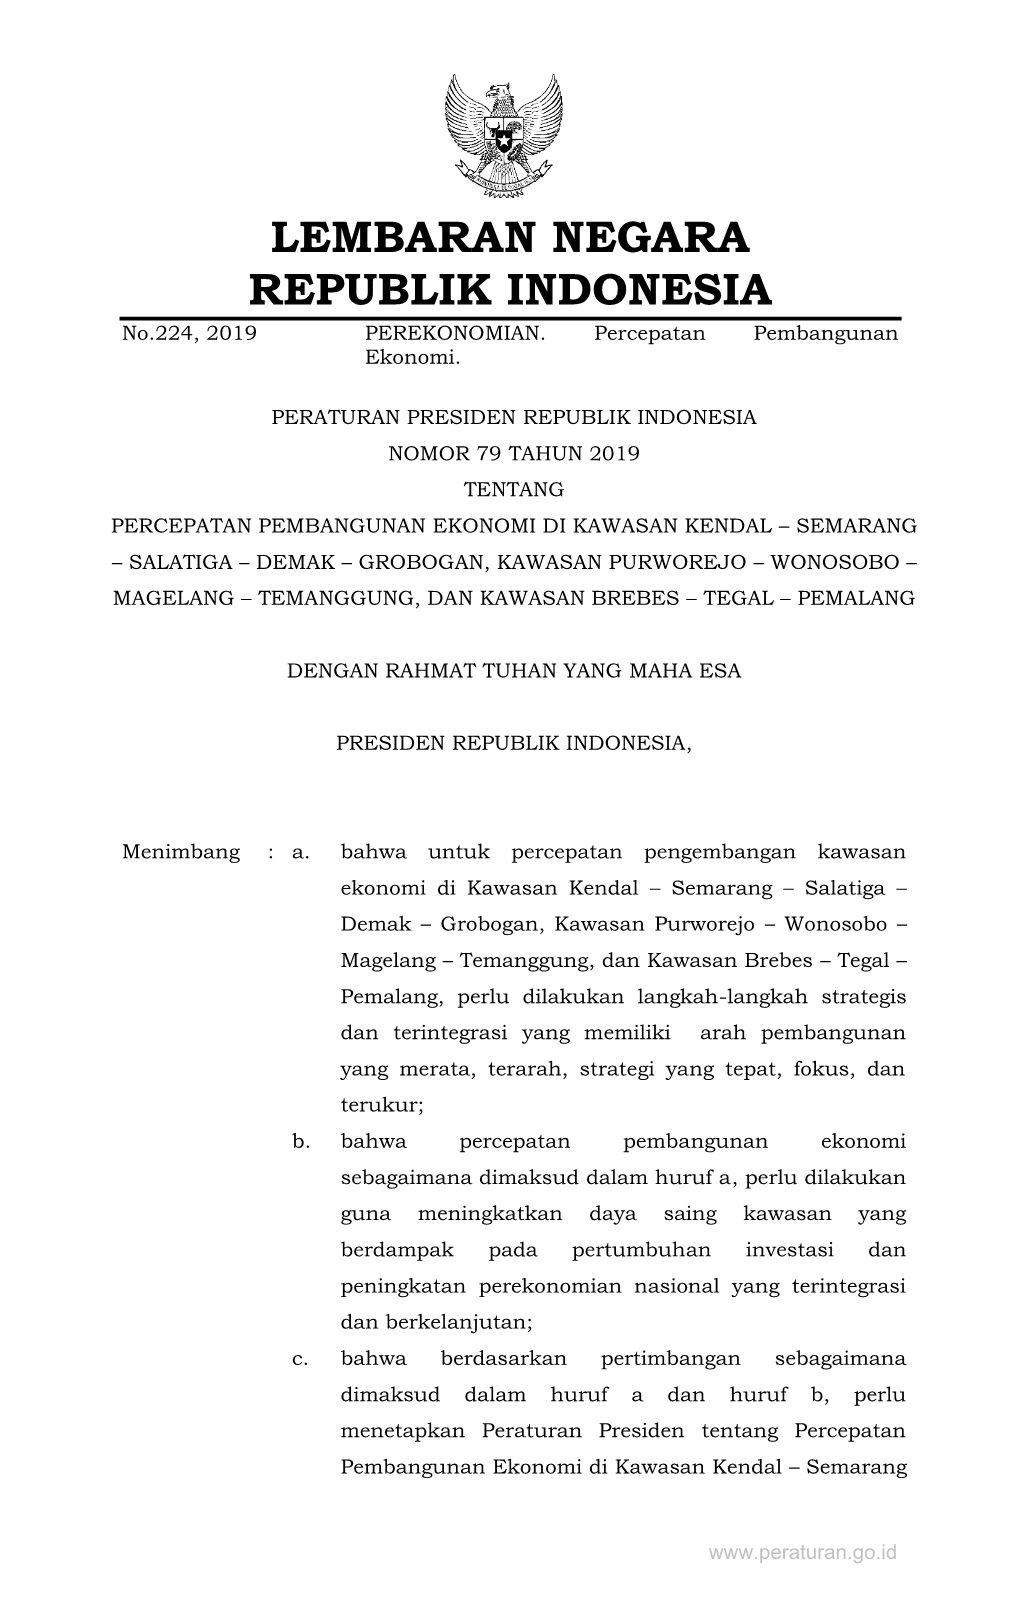 LEMBARAN NEGARA REPUBLIK INDONESIA No.224, 2019 PEREKONOMIAN